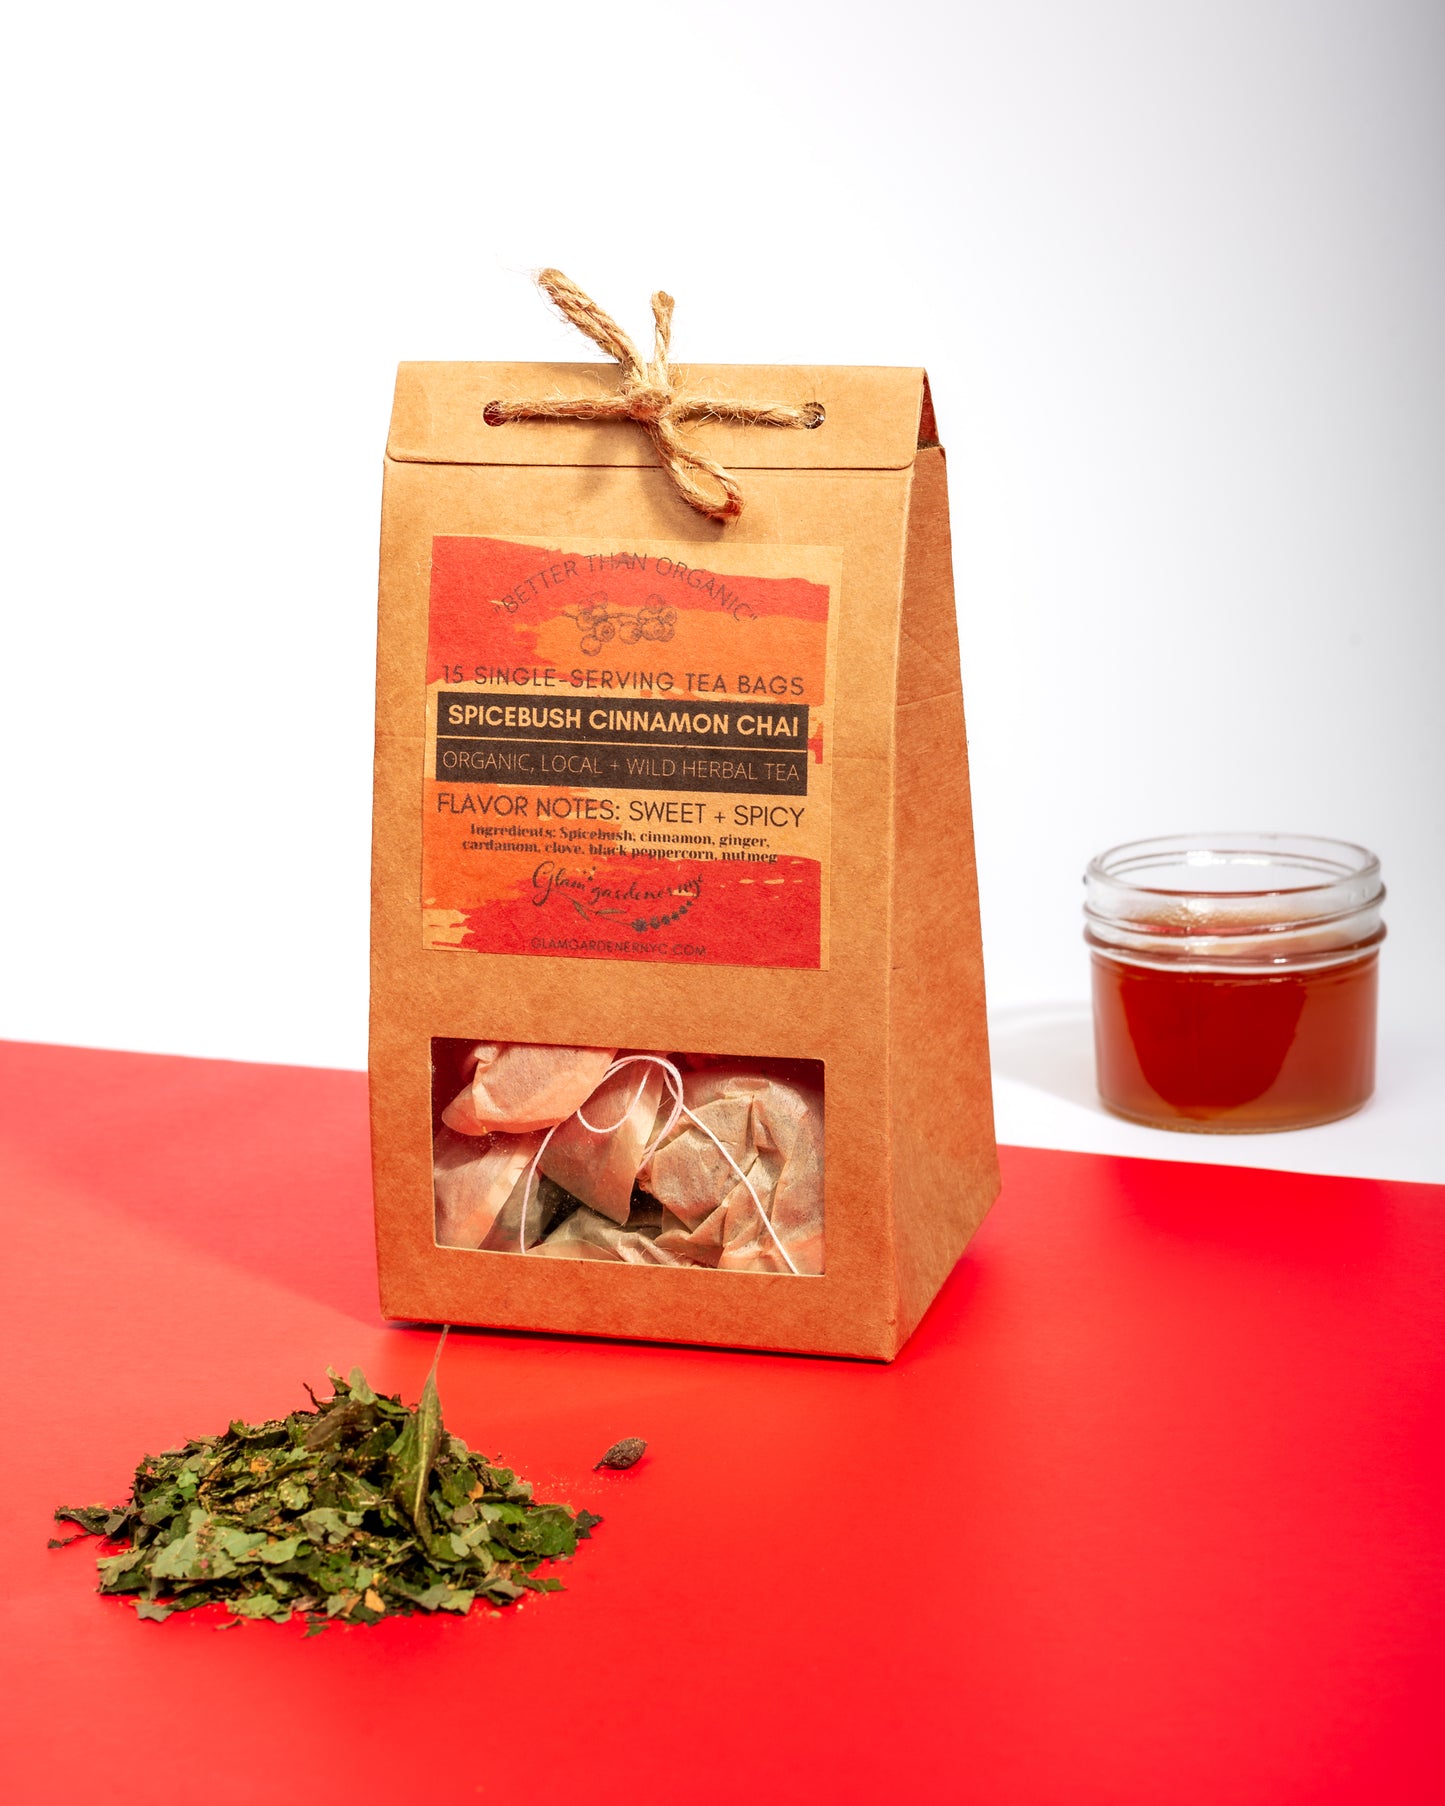 Spicebush Cinnamon Chai tea bagged herbal tea (sweet, spicy, and warming)